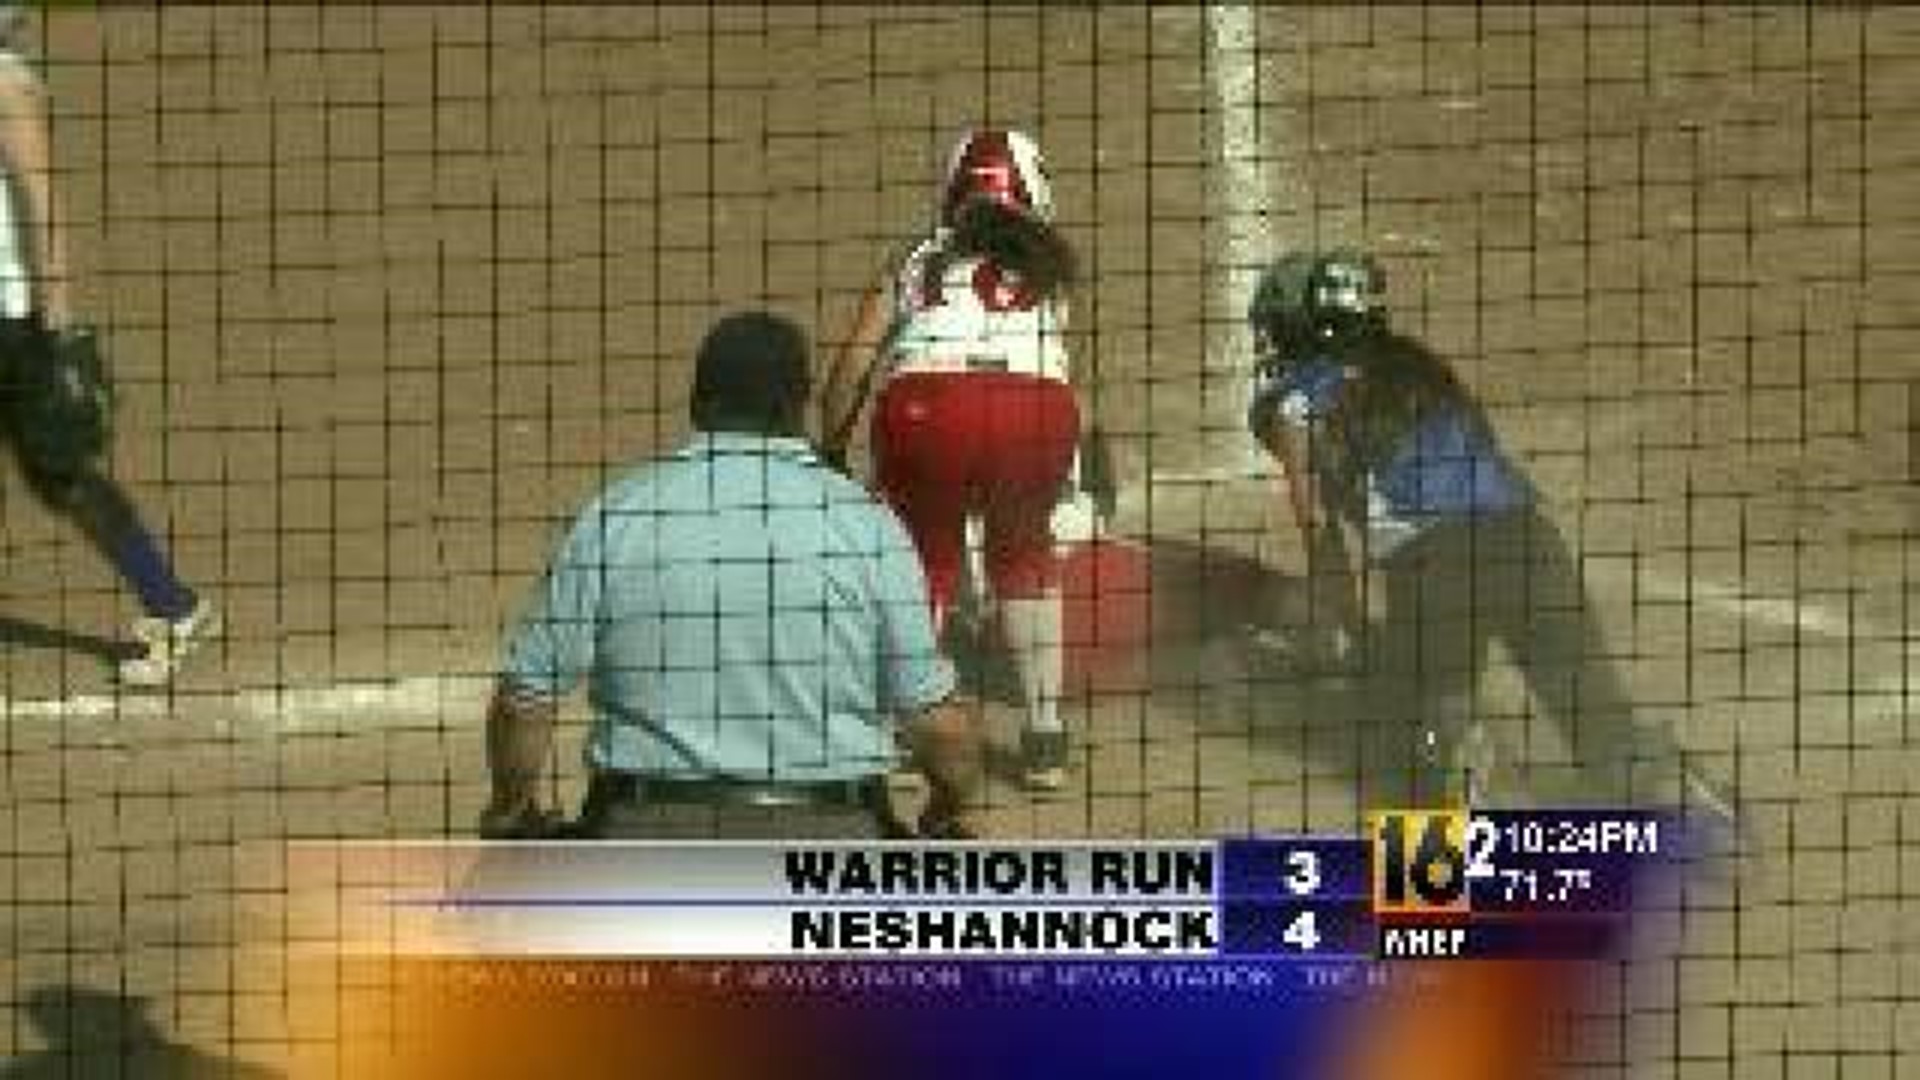 Neshannock vs Warrior Run Softball